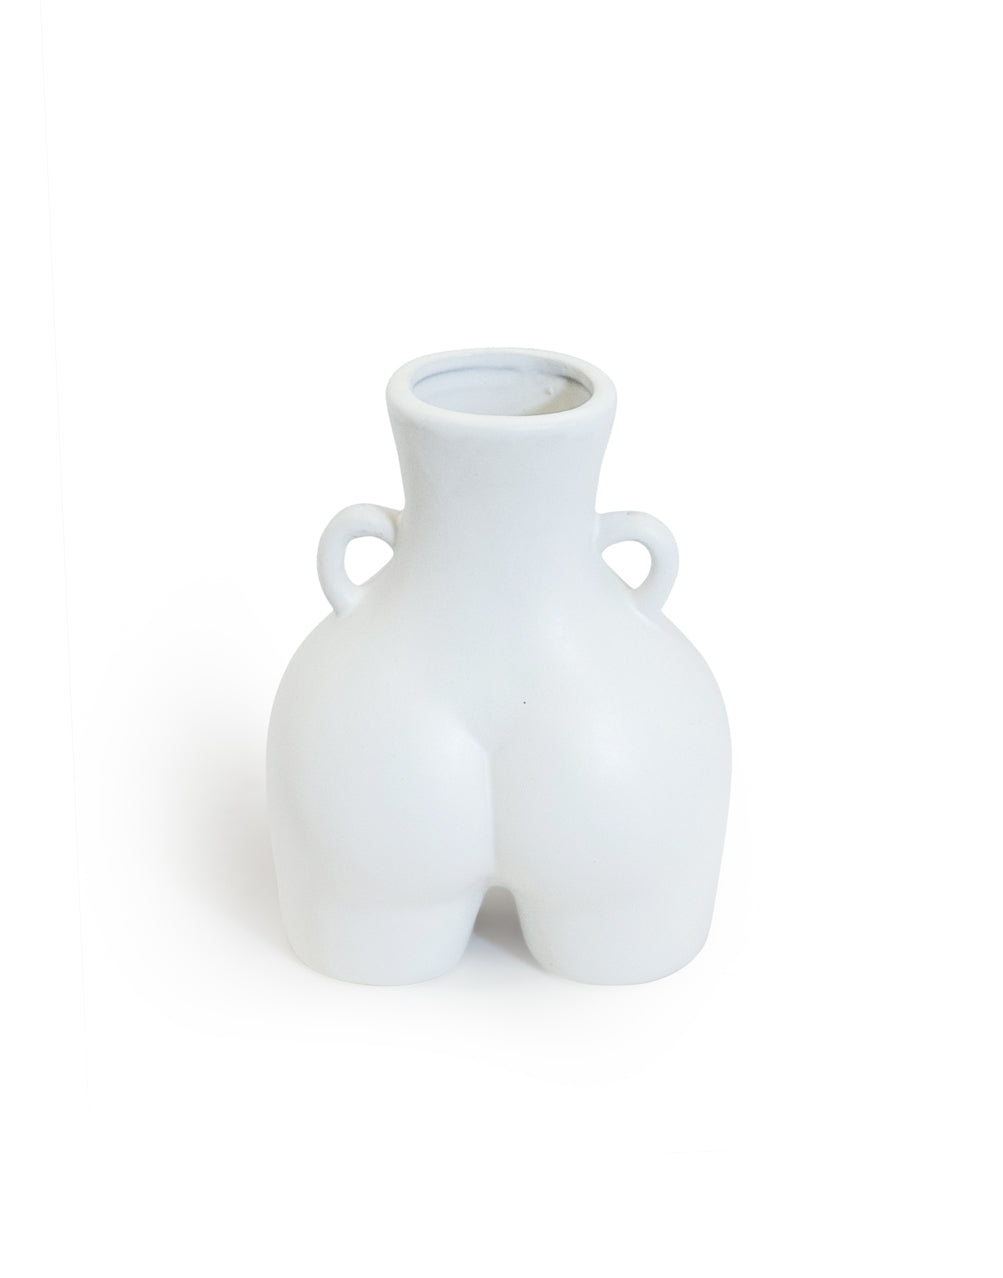 Matt White Medium "Love Handles" Booty Vase